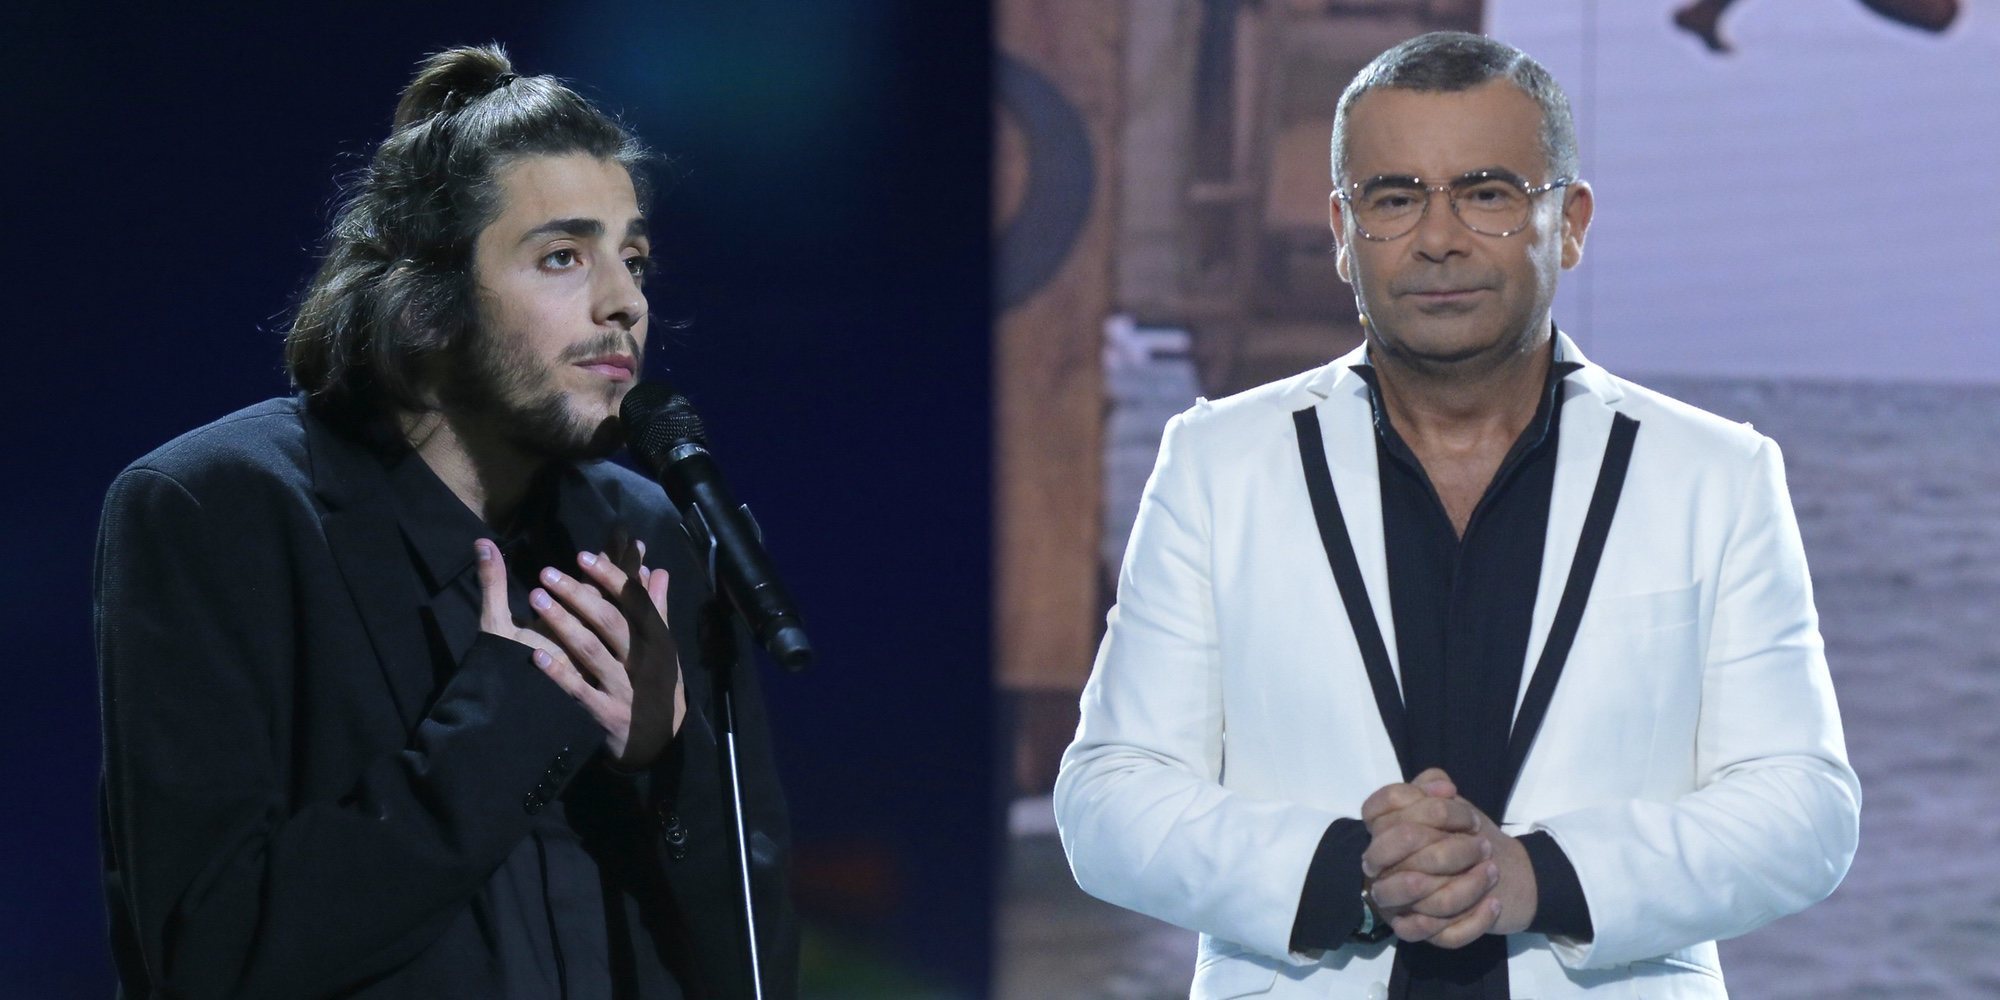 Jorge Javier Vázquez contra Salvador Sobral por criticar 'Sálvame': "Has ganado Eurovisión, no creado Grindr"